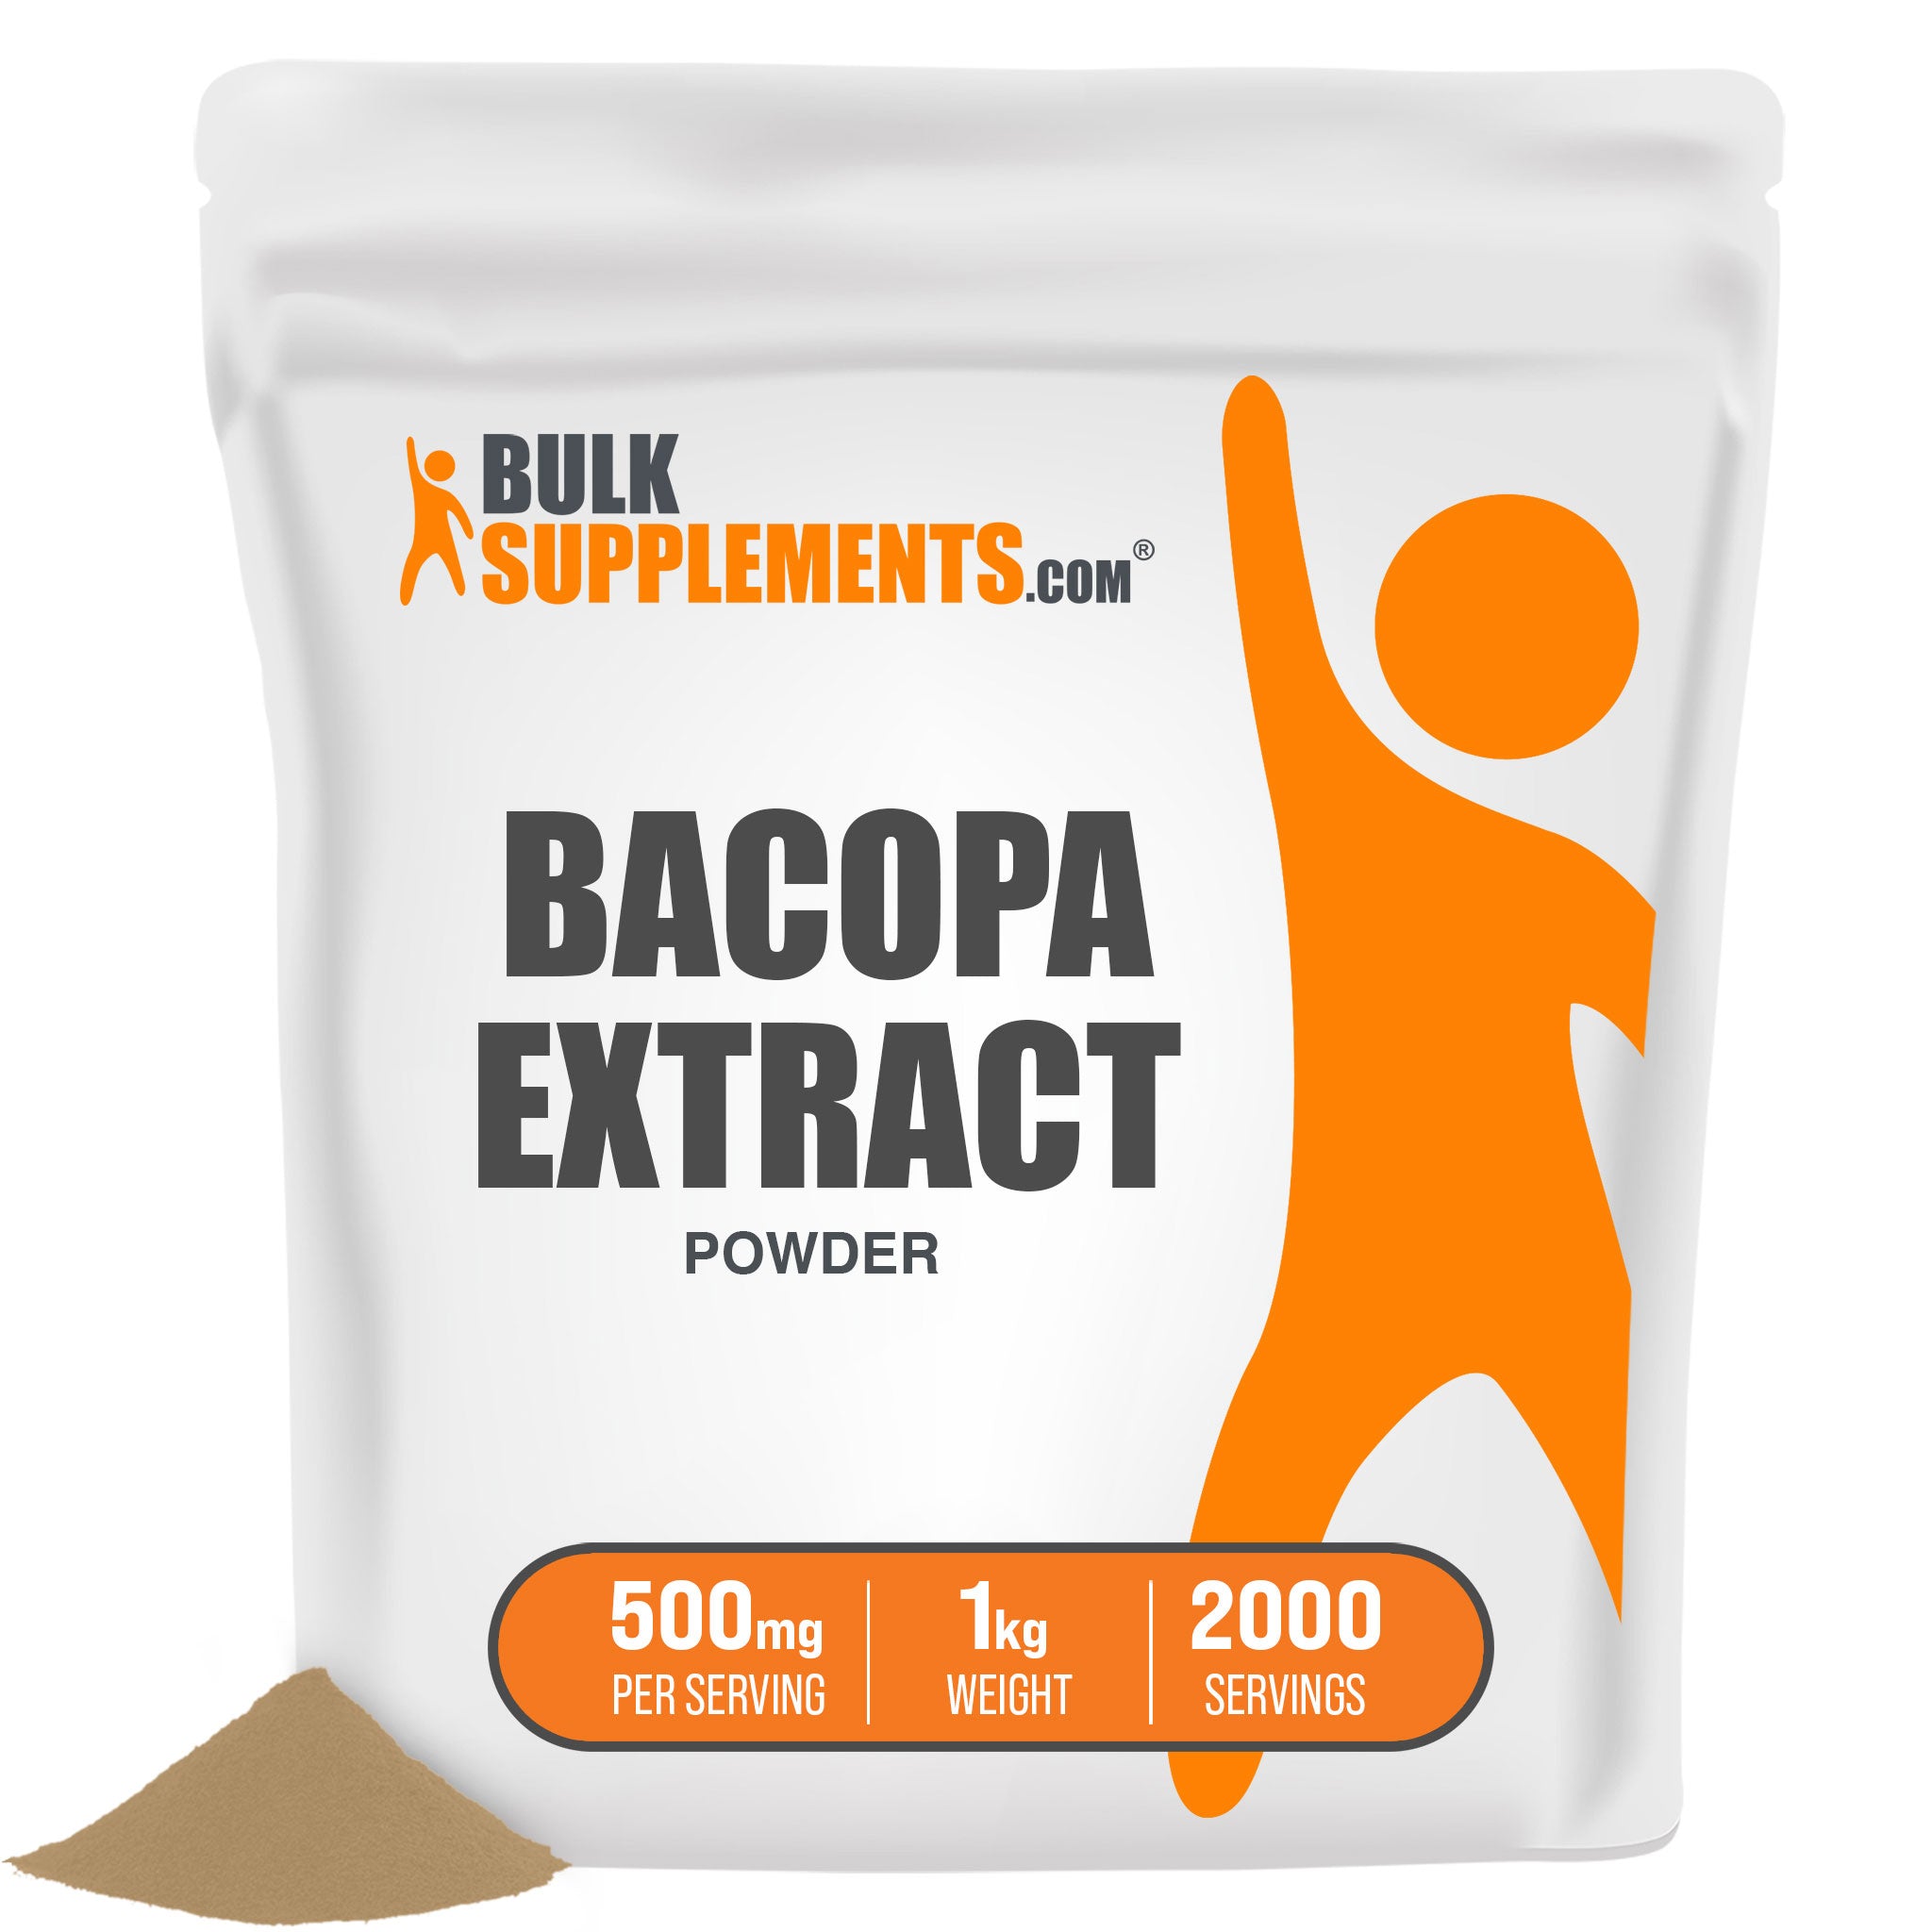 Brahmi Bacopa Extract Powder 1kg Bag